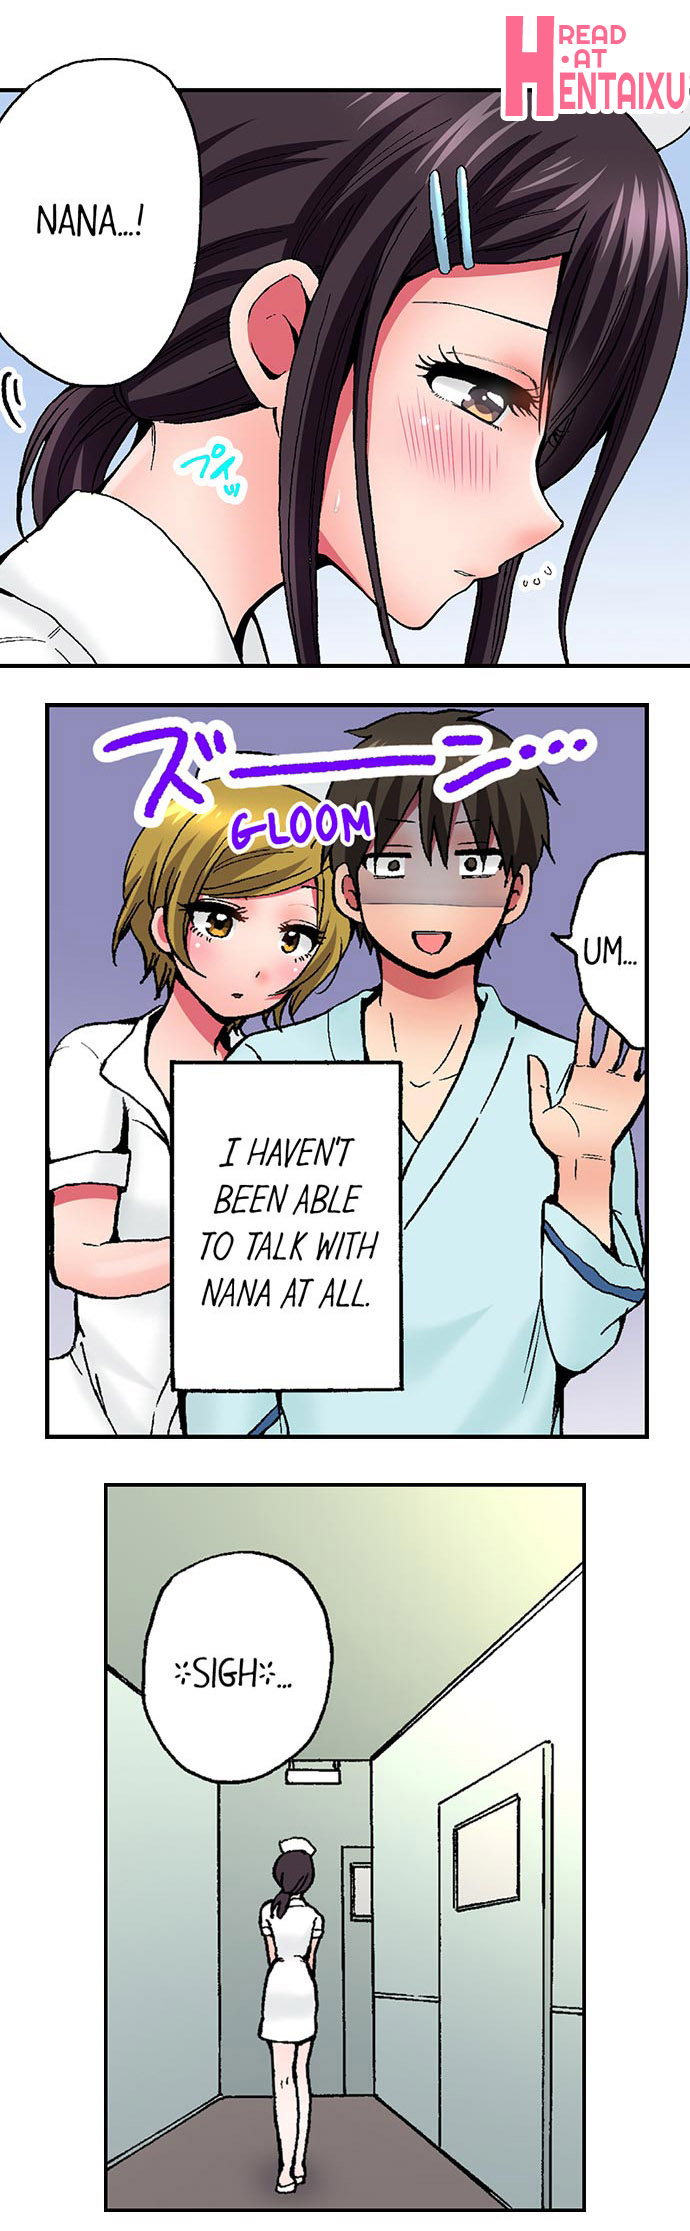 [Yukikuni] Pranking the Working Nurse Ch.12/? [English] [Hentai Universe]